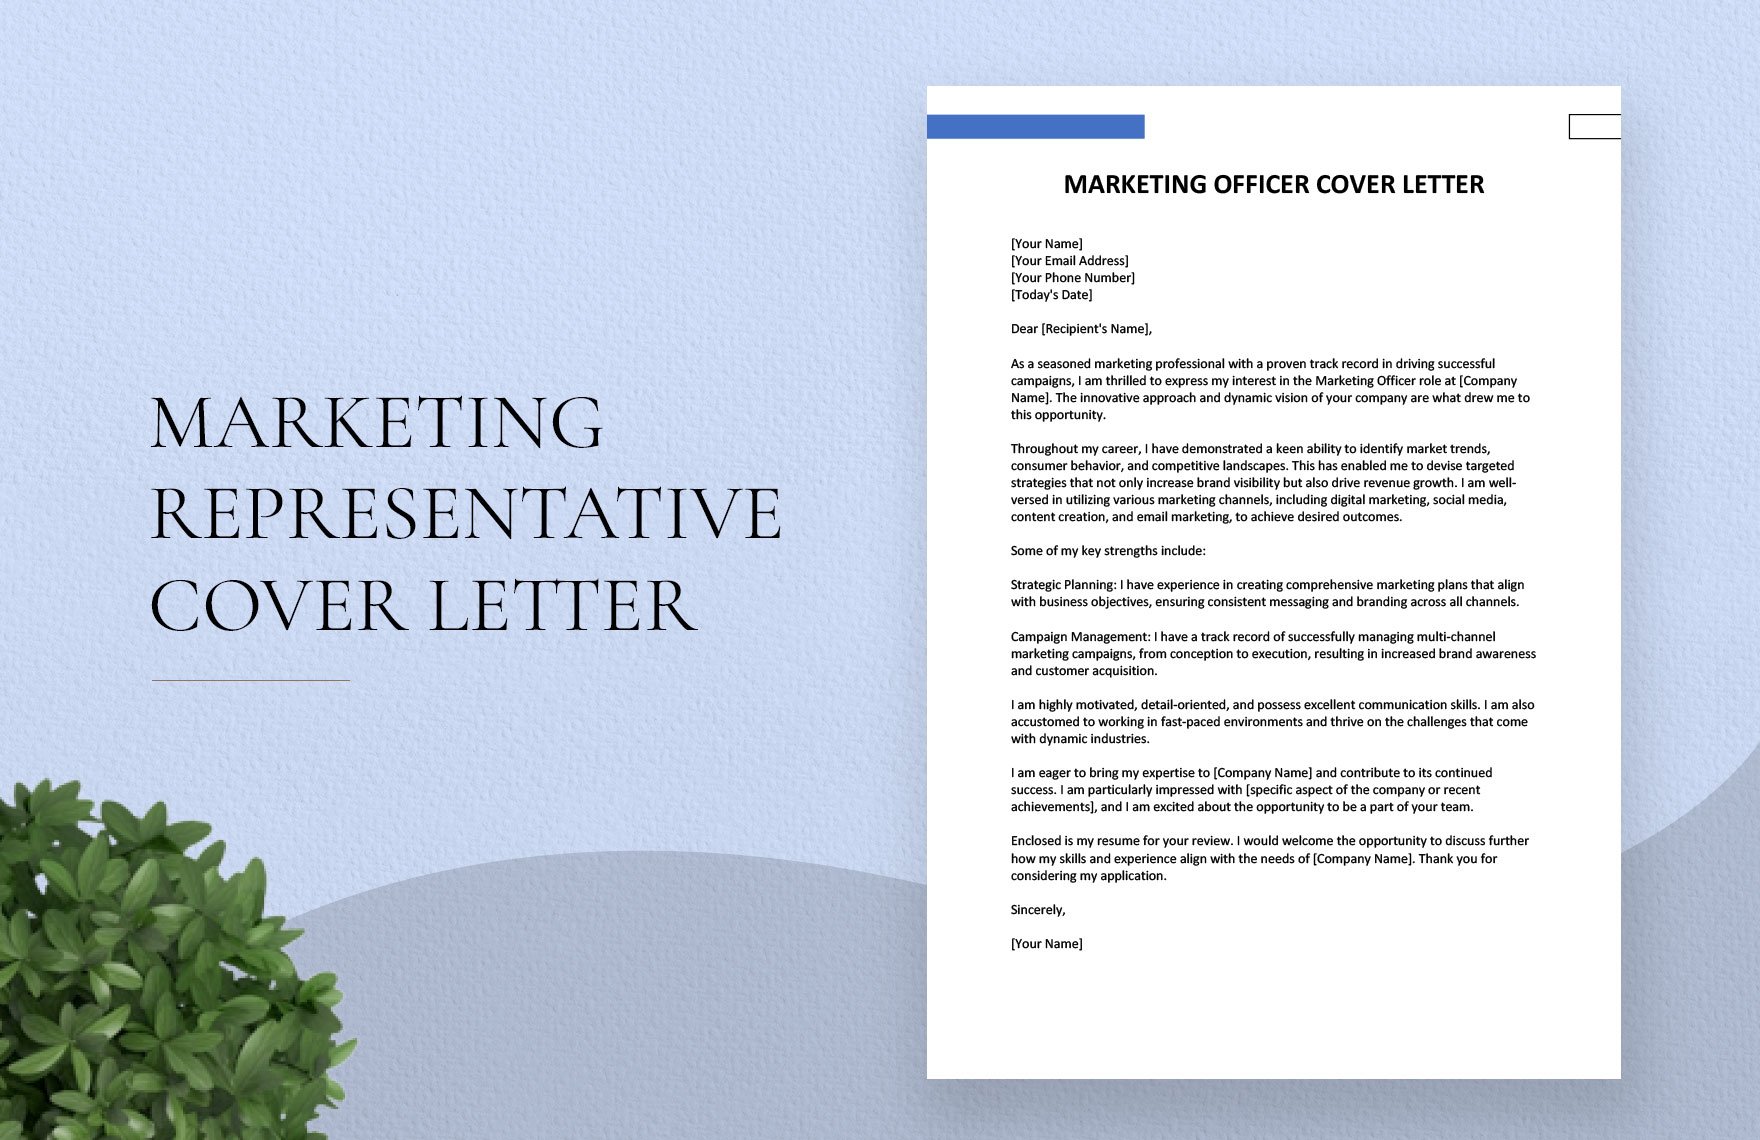 Marketing Officer Cover Letter in Word, Google Docs